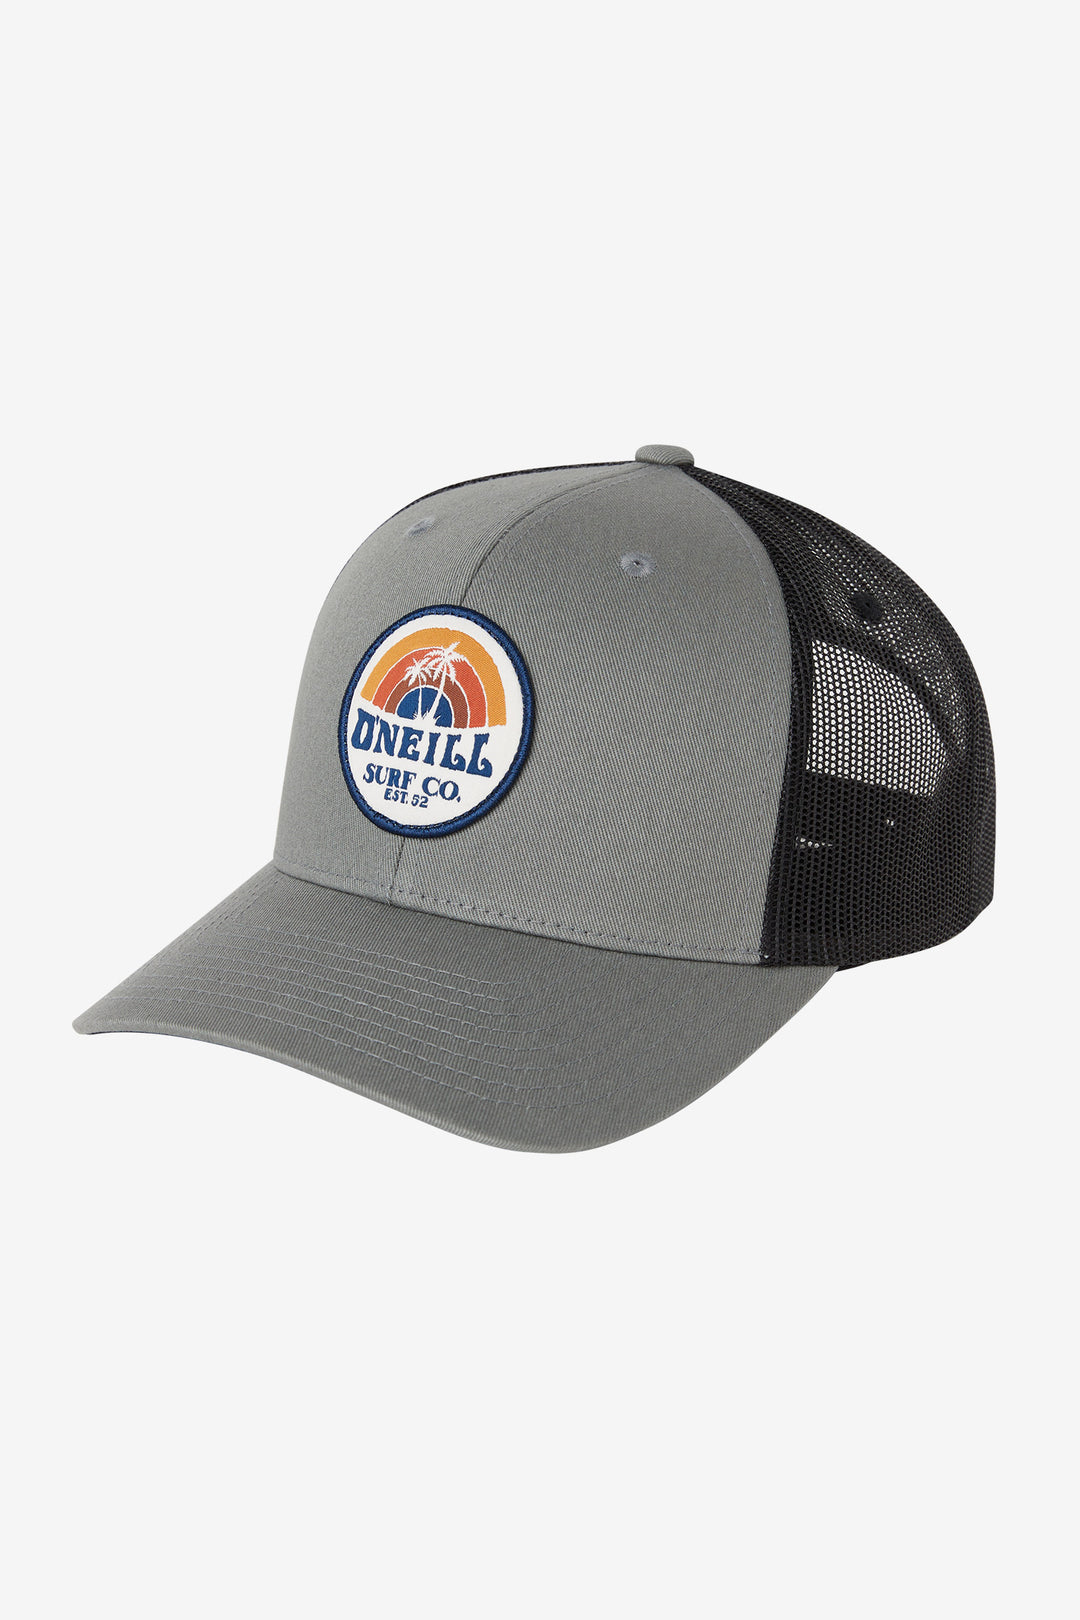 O'Neill Stash Trucker Hat Apparel O'Neill Grey  